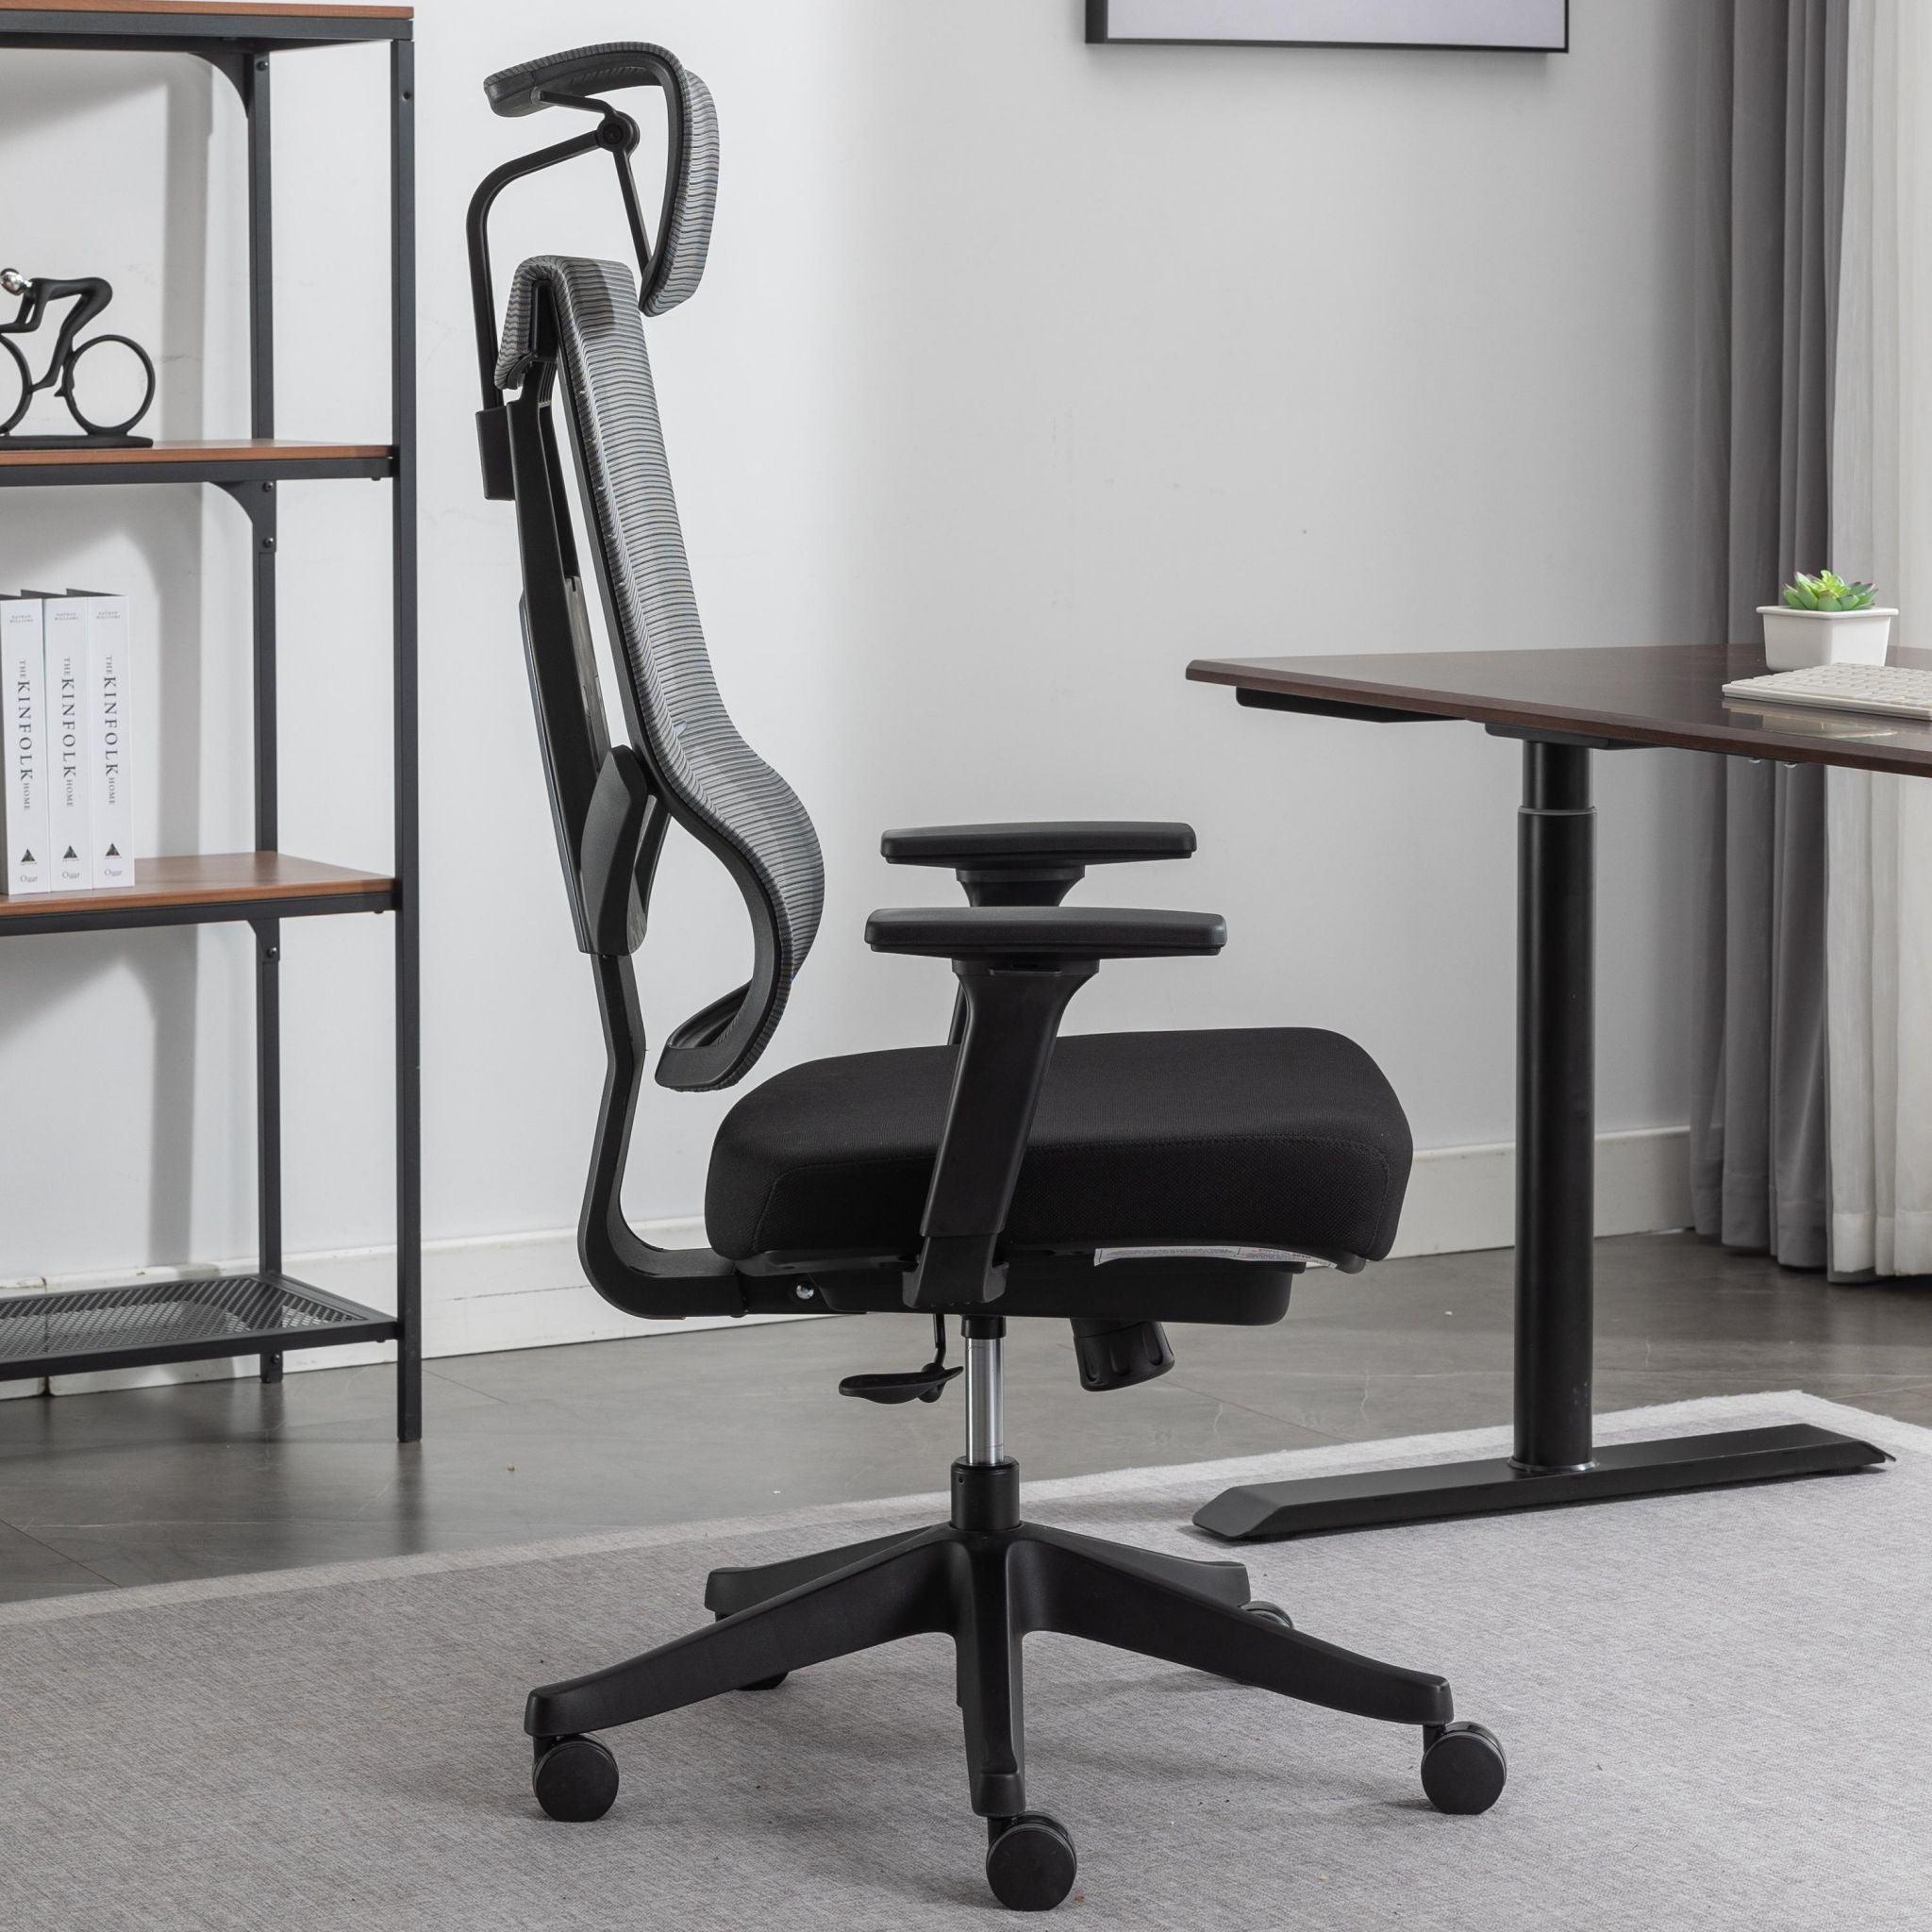 Ergonomic Office Chair Pro 3007 - Honsit Chair